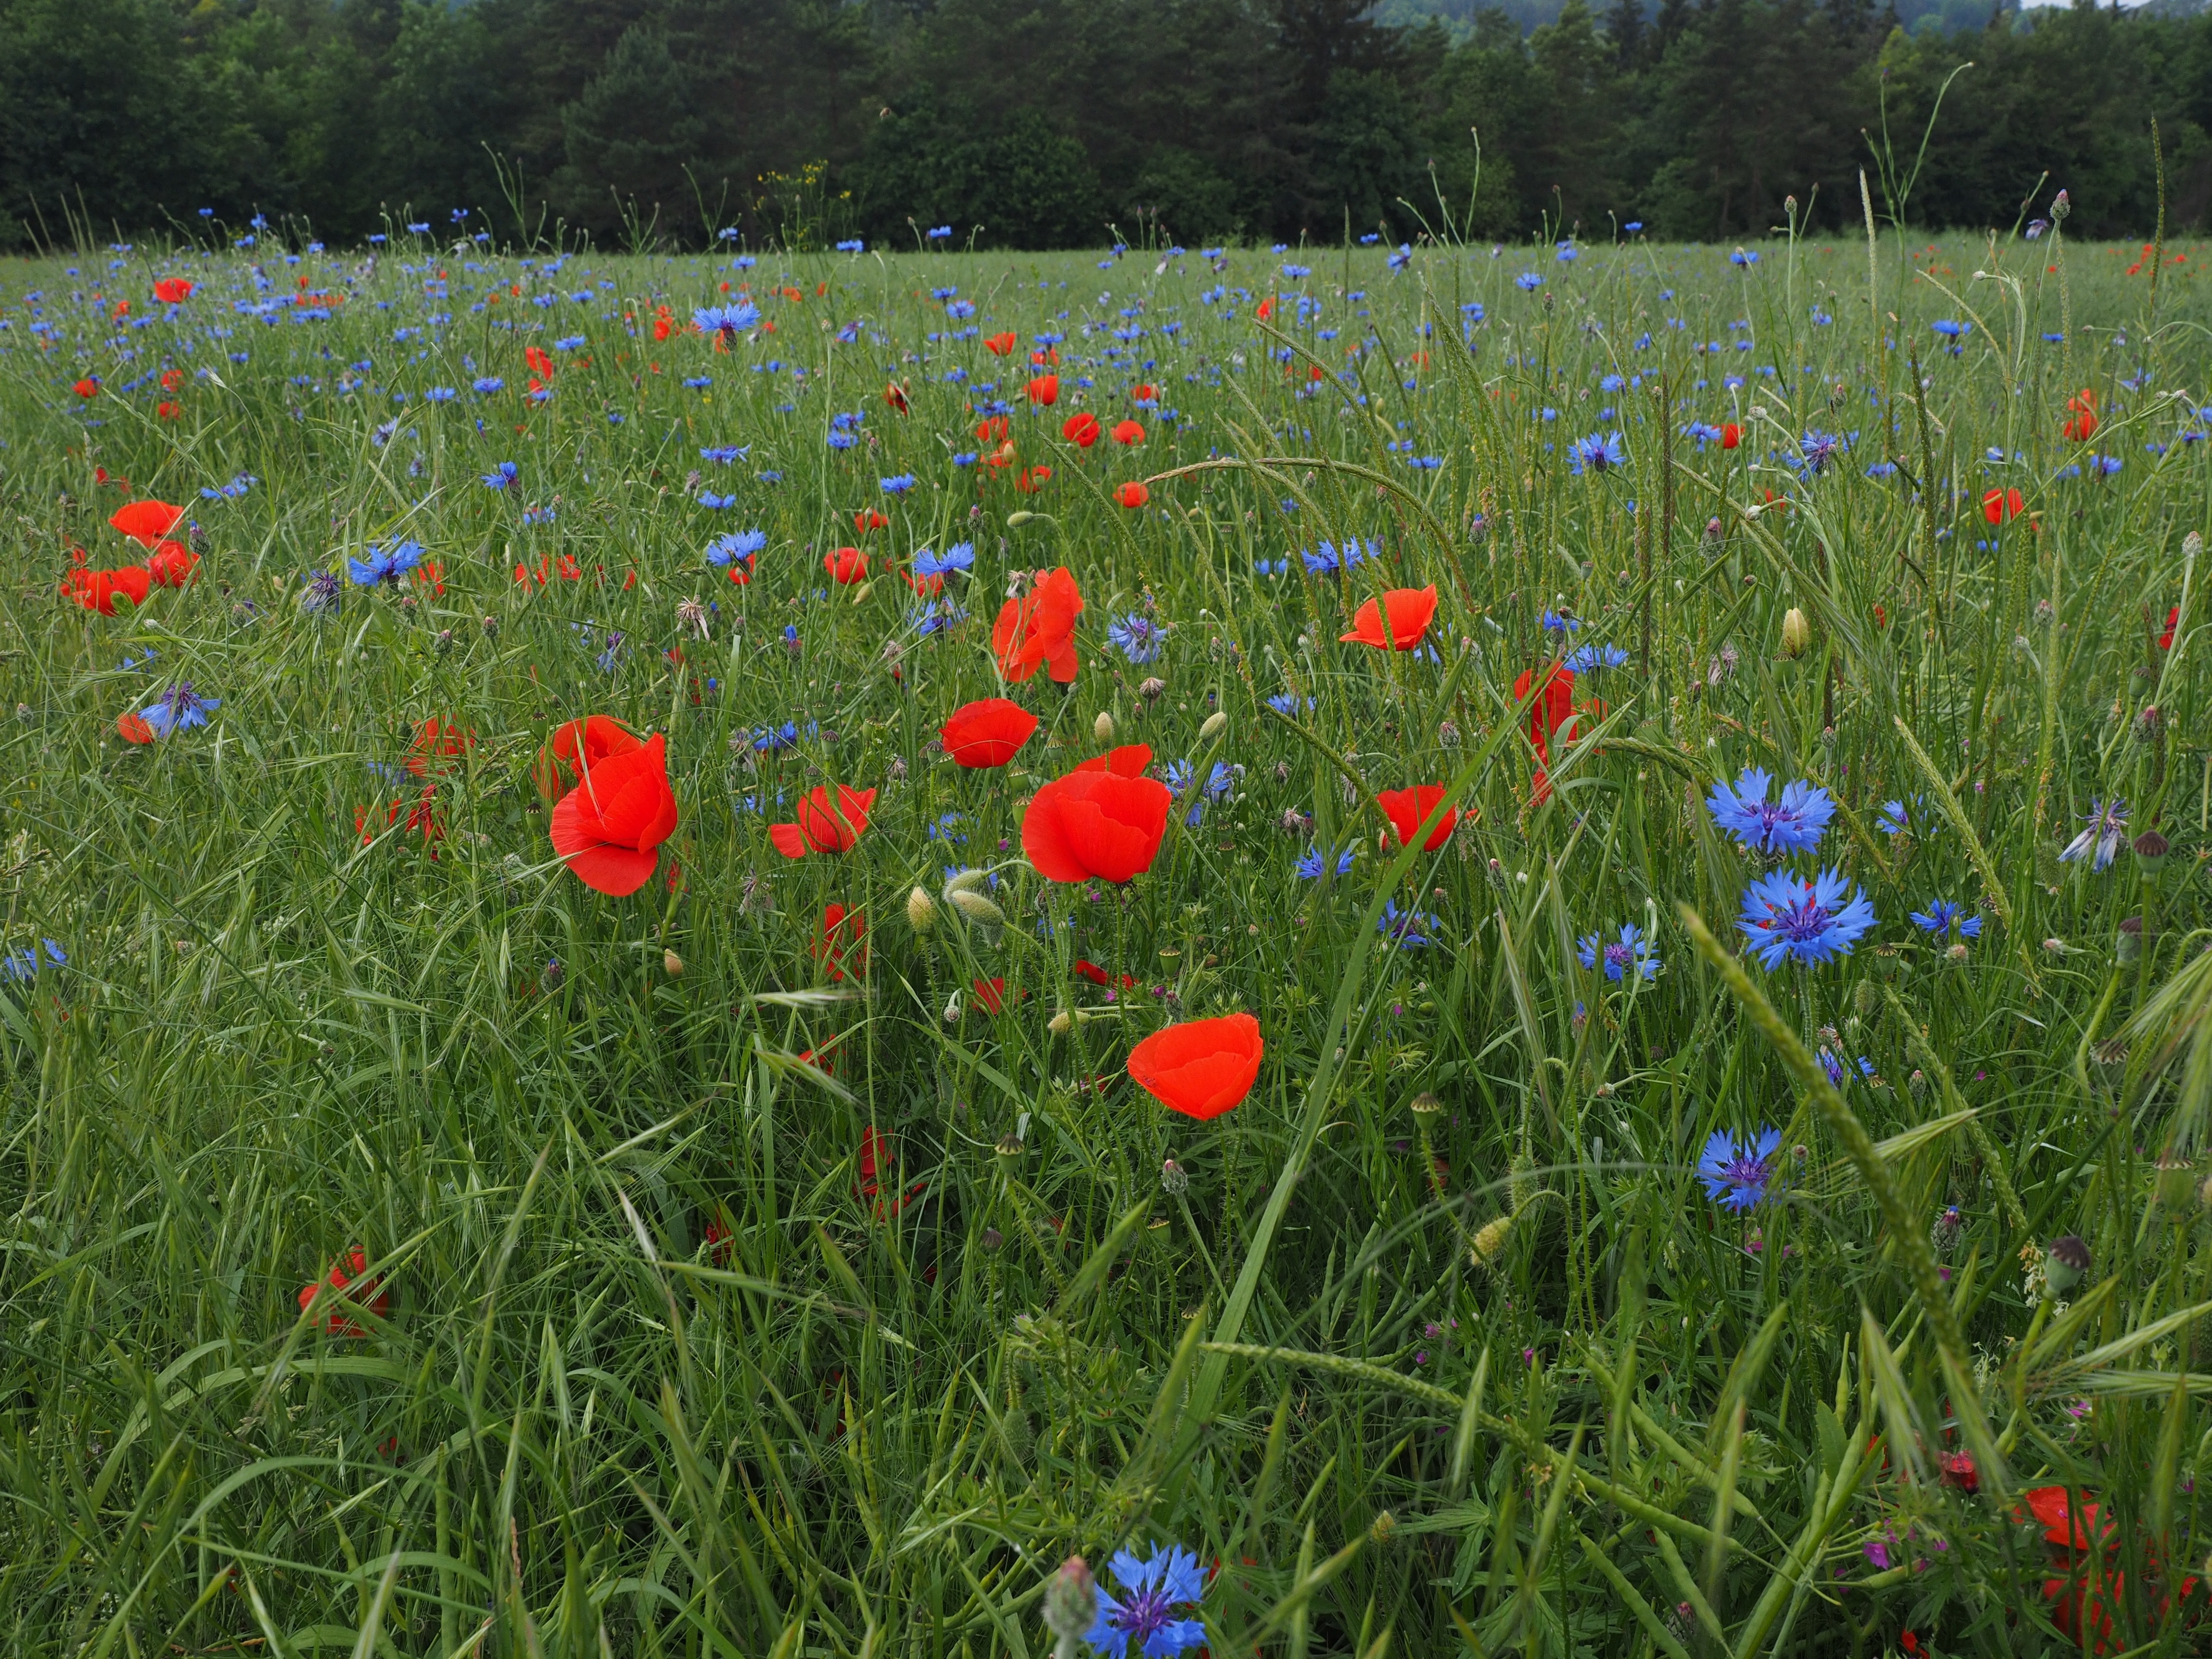 Field Of Poppies, Kornblumenfeld, poppy, flower